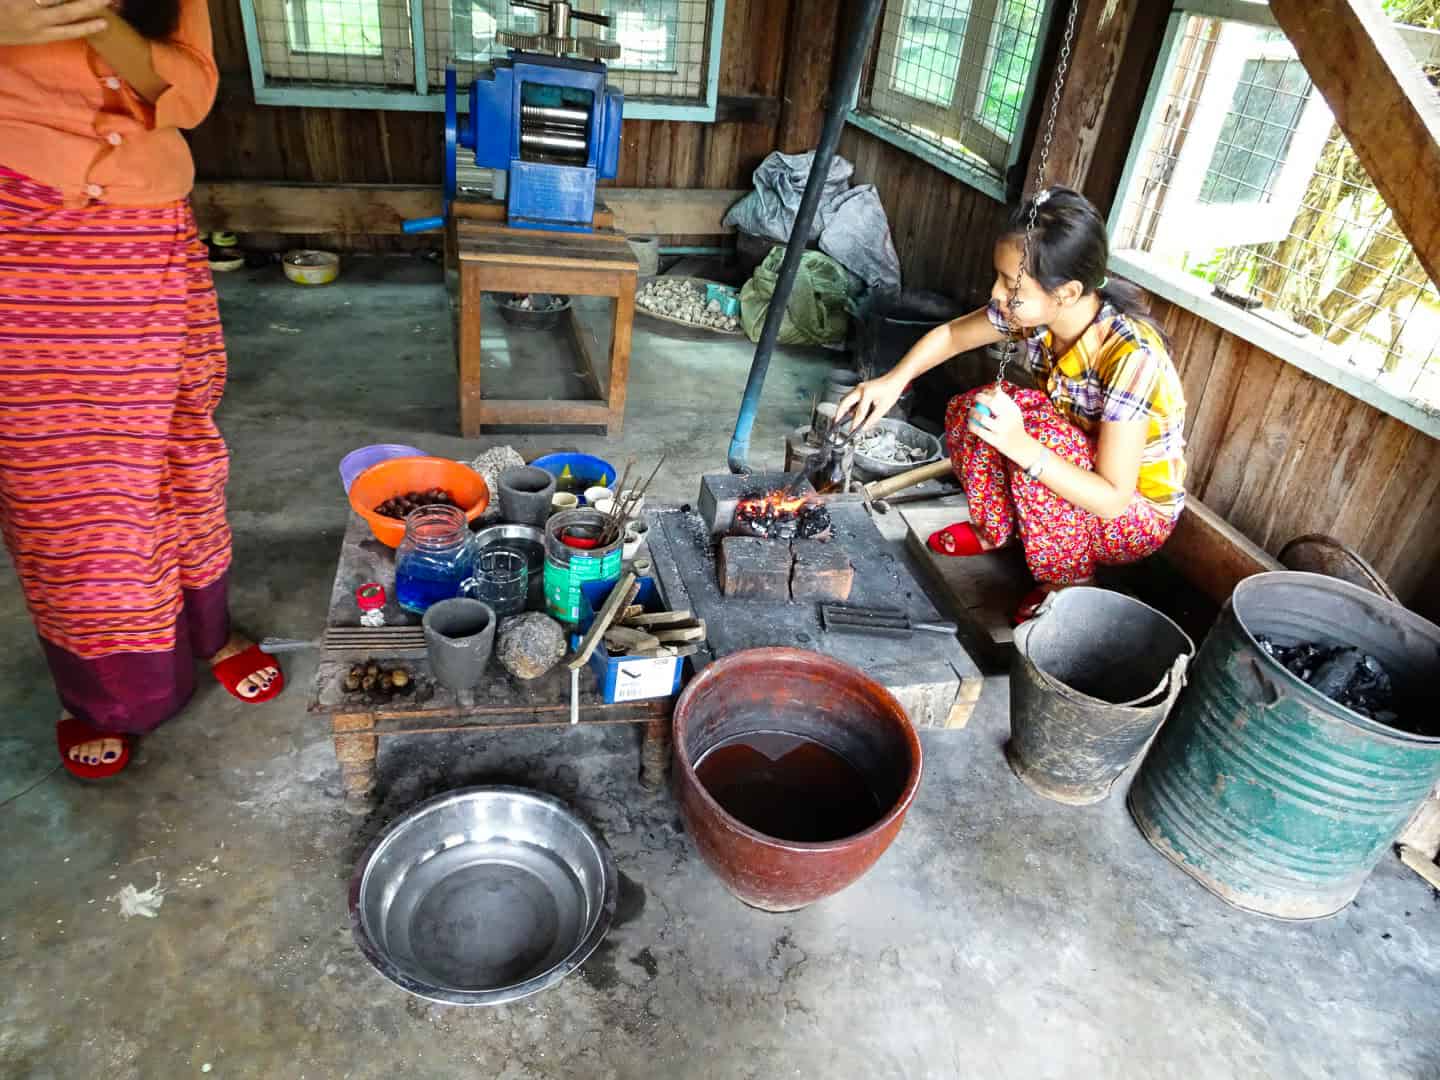 Local handicraft worker, Inle Lake, Burma